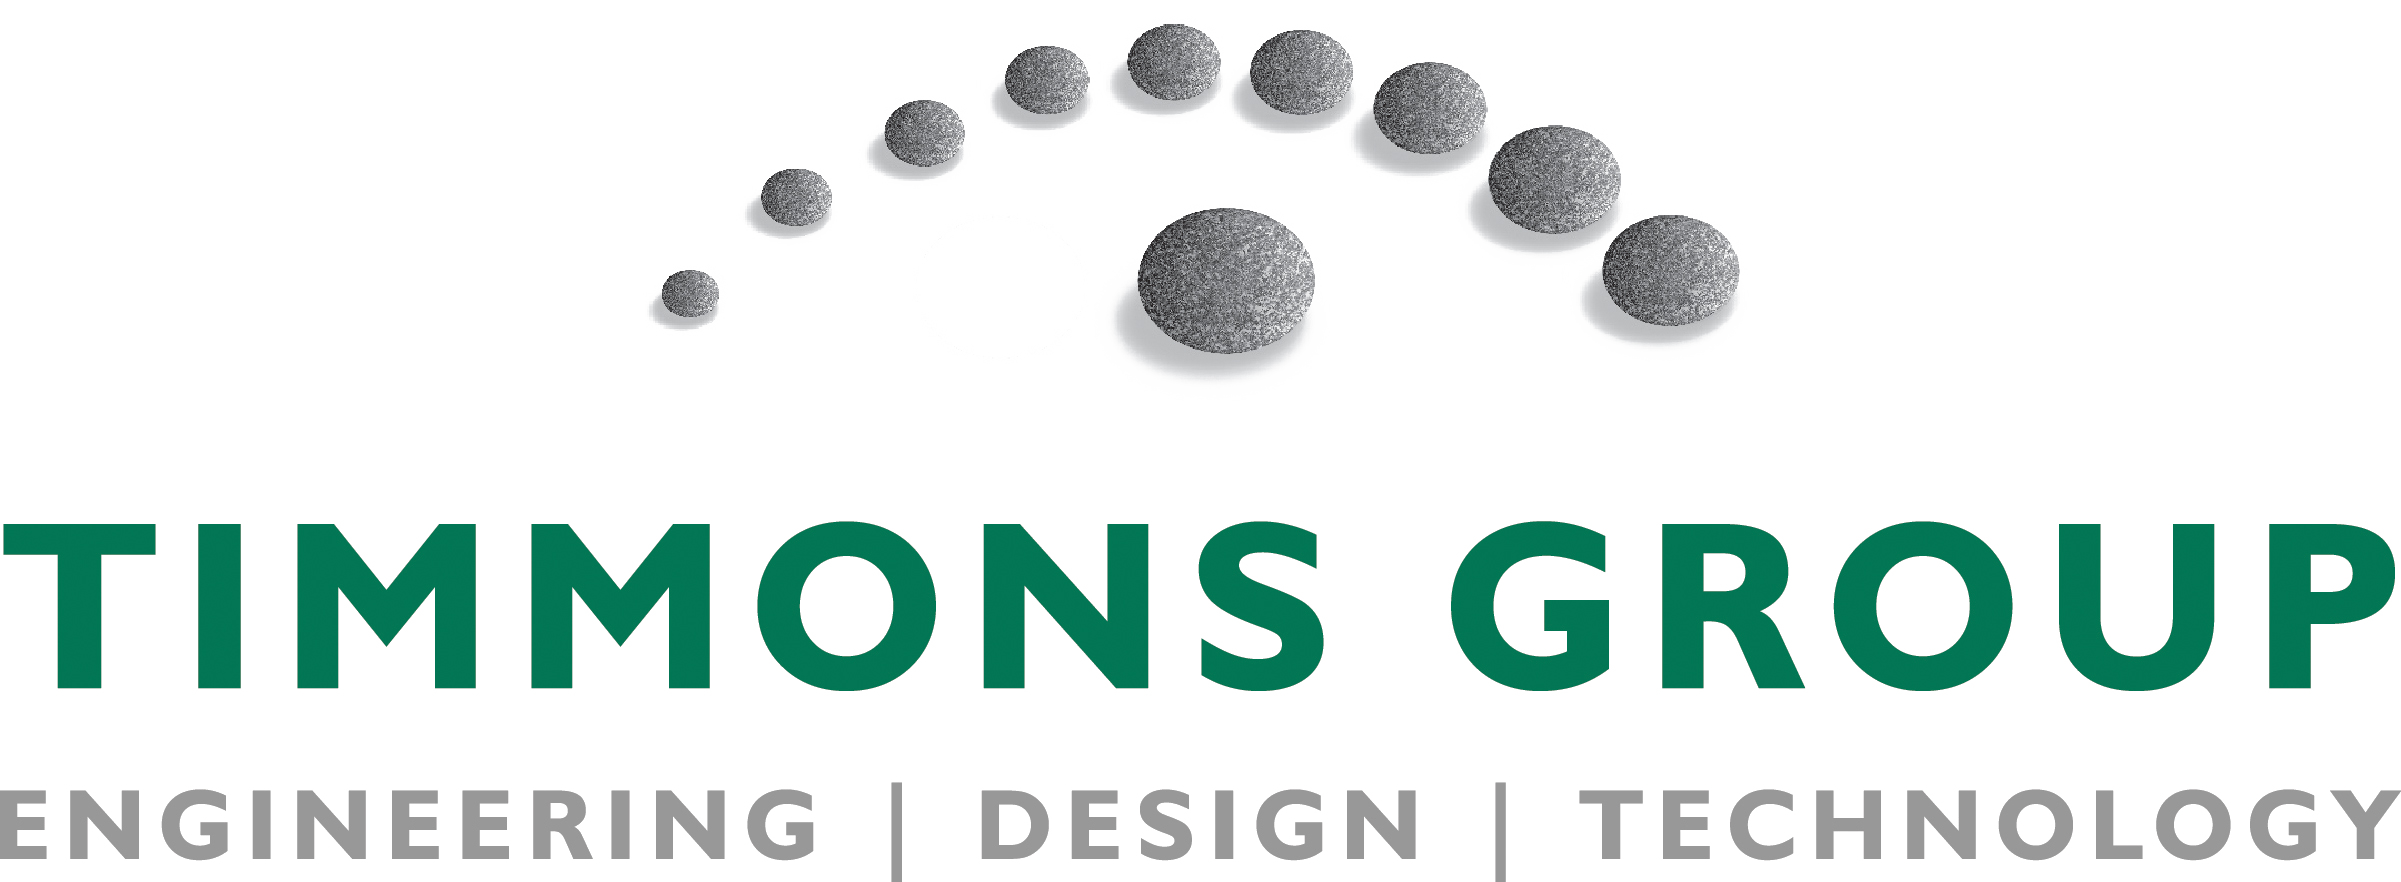 Timmons Group Company Logo